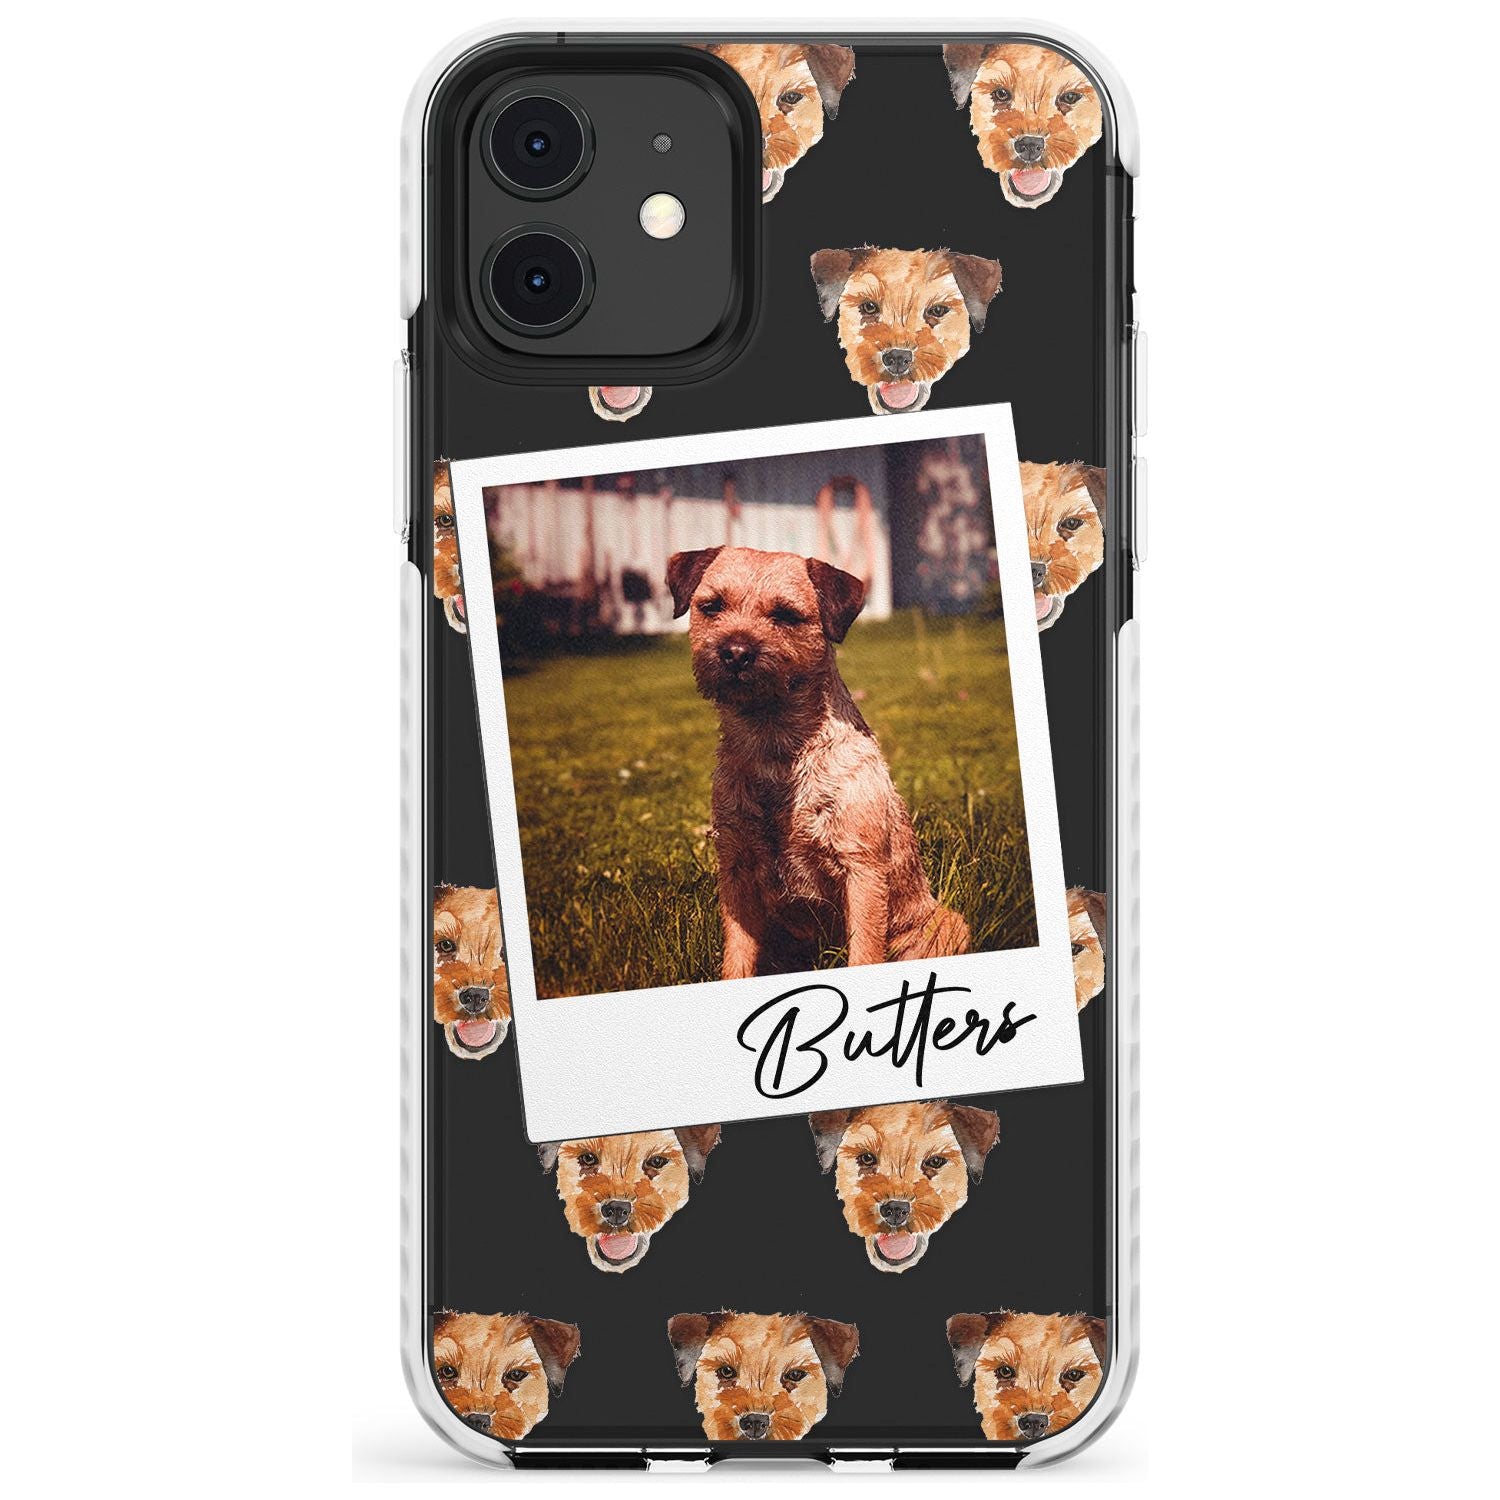 Border Terrier - Custom Dog Photo Slim TPU Phone Case for iPhone 11